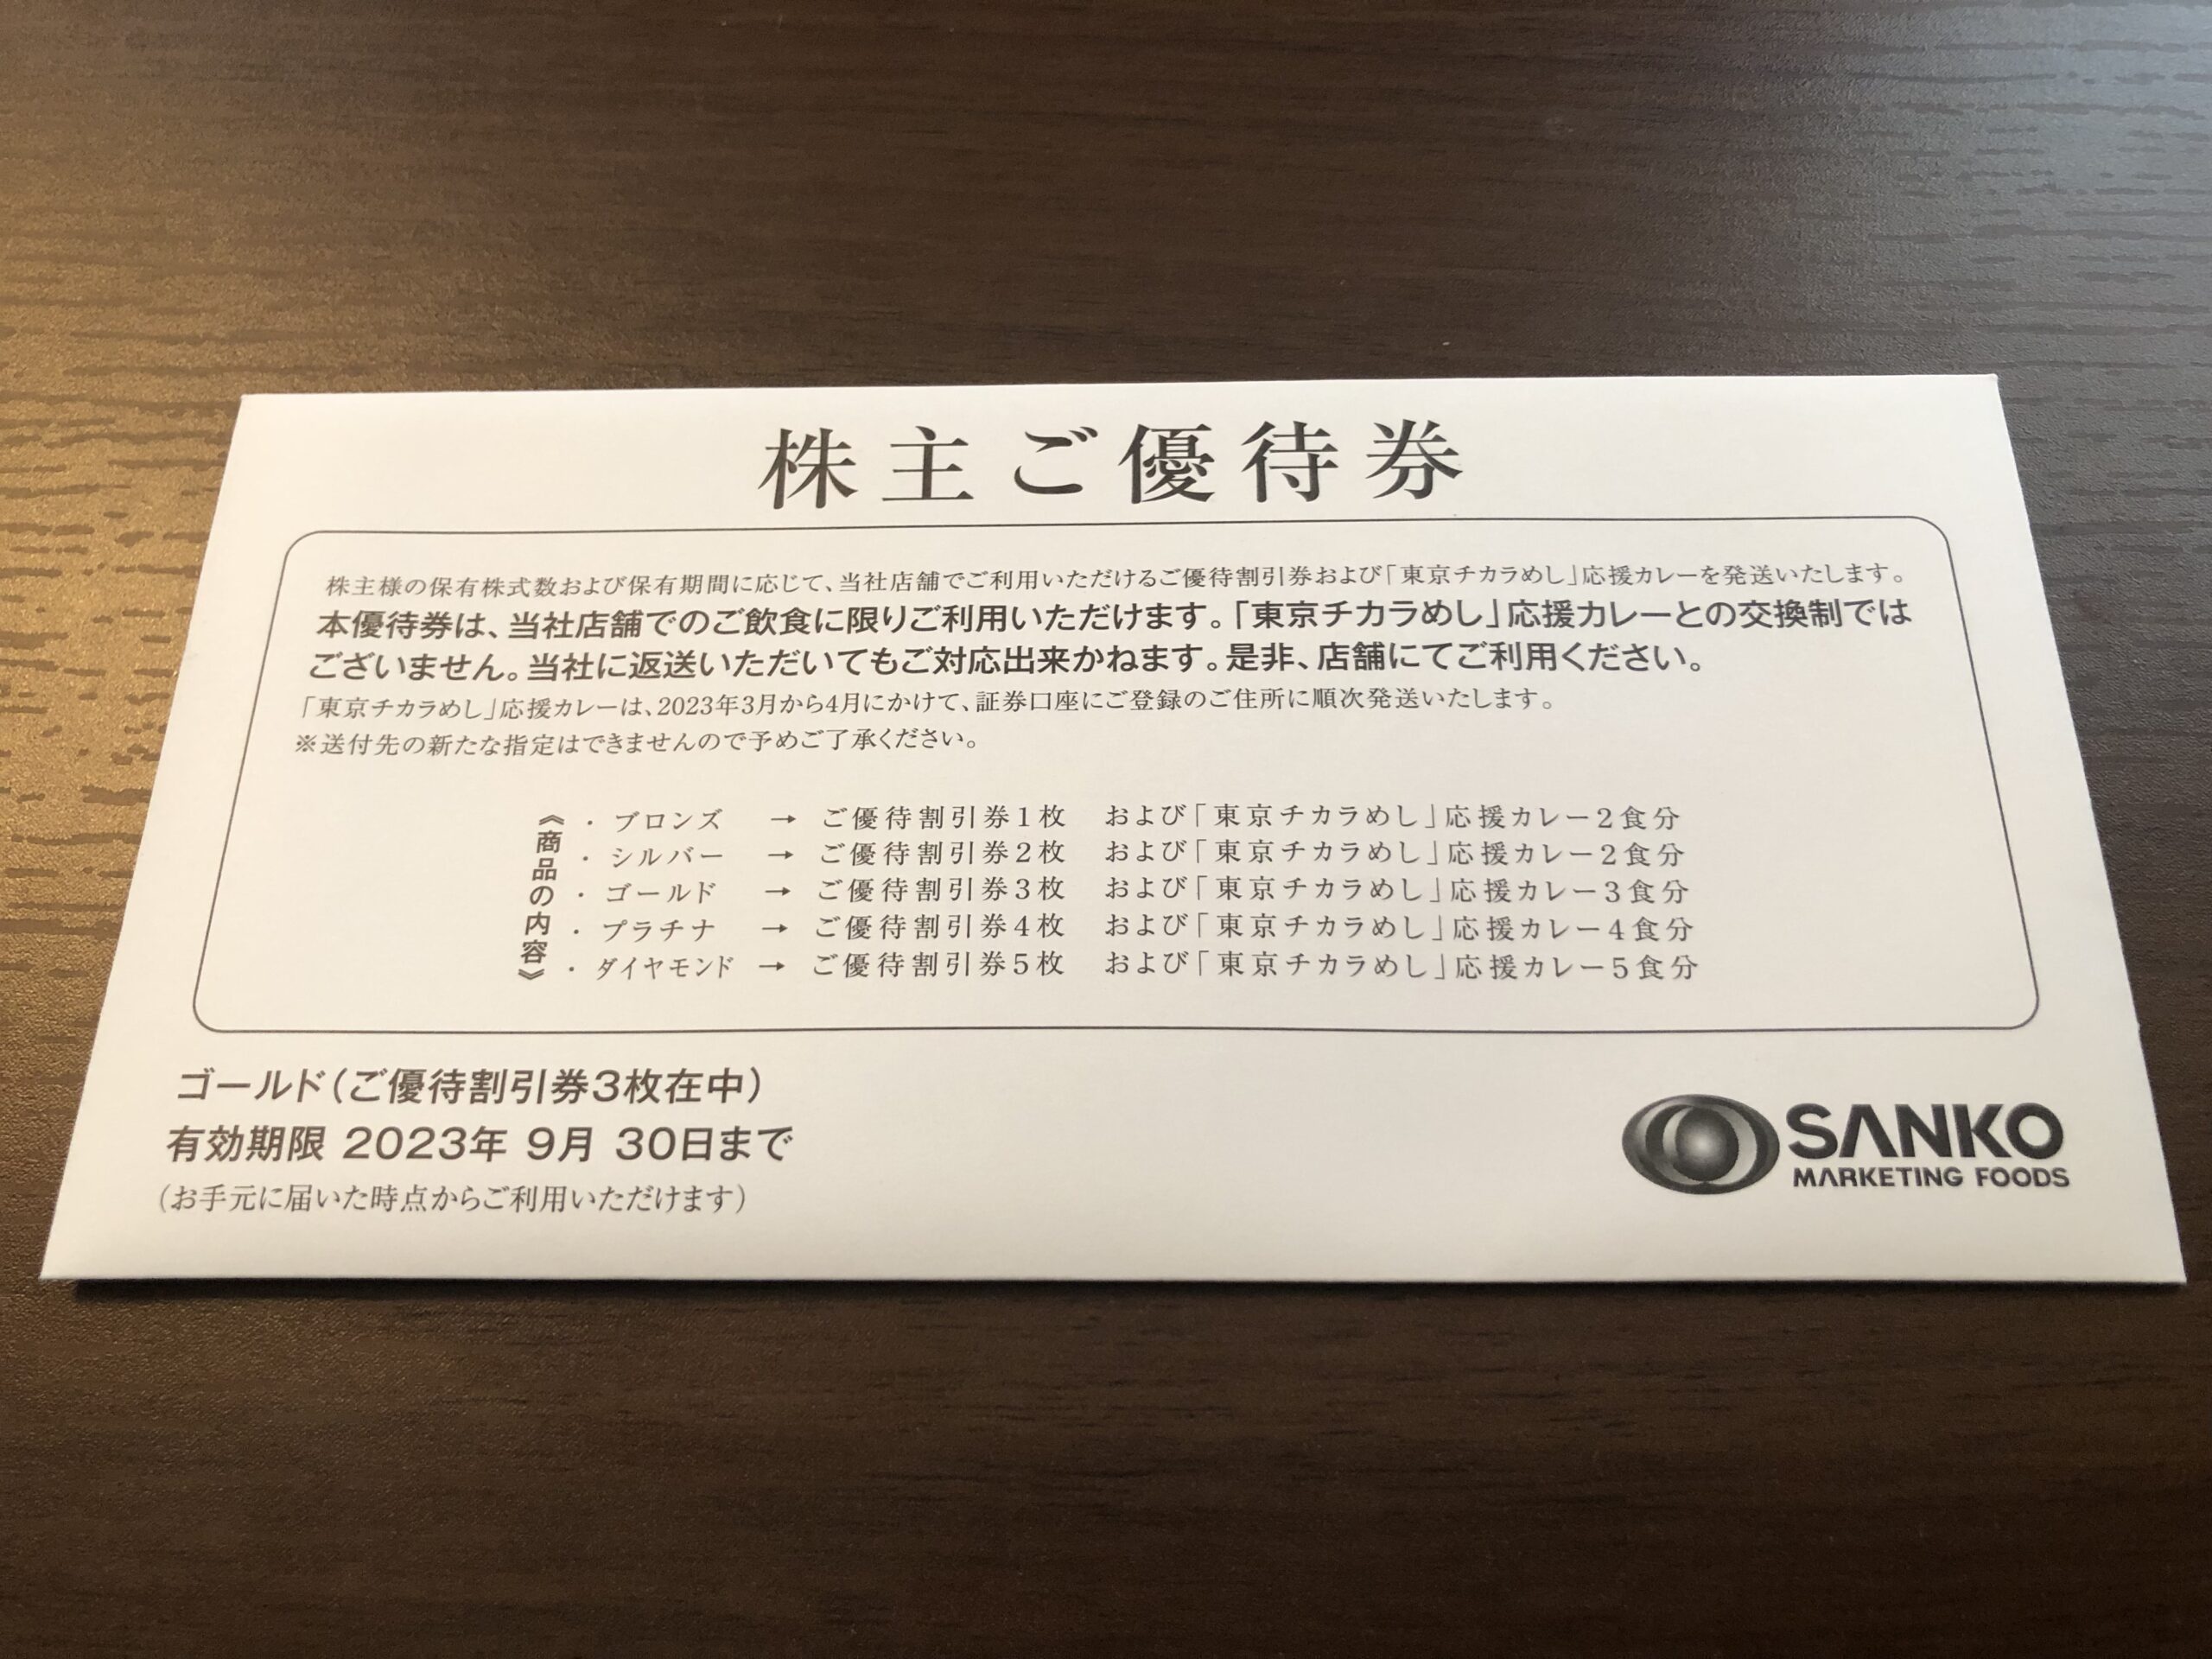 SANKO marketing　foods　株主優待　2023